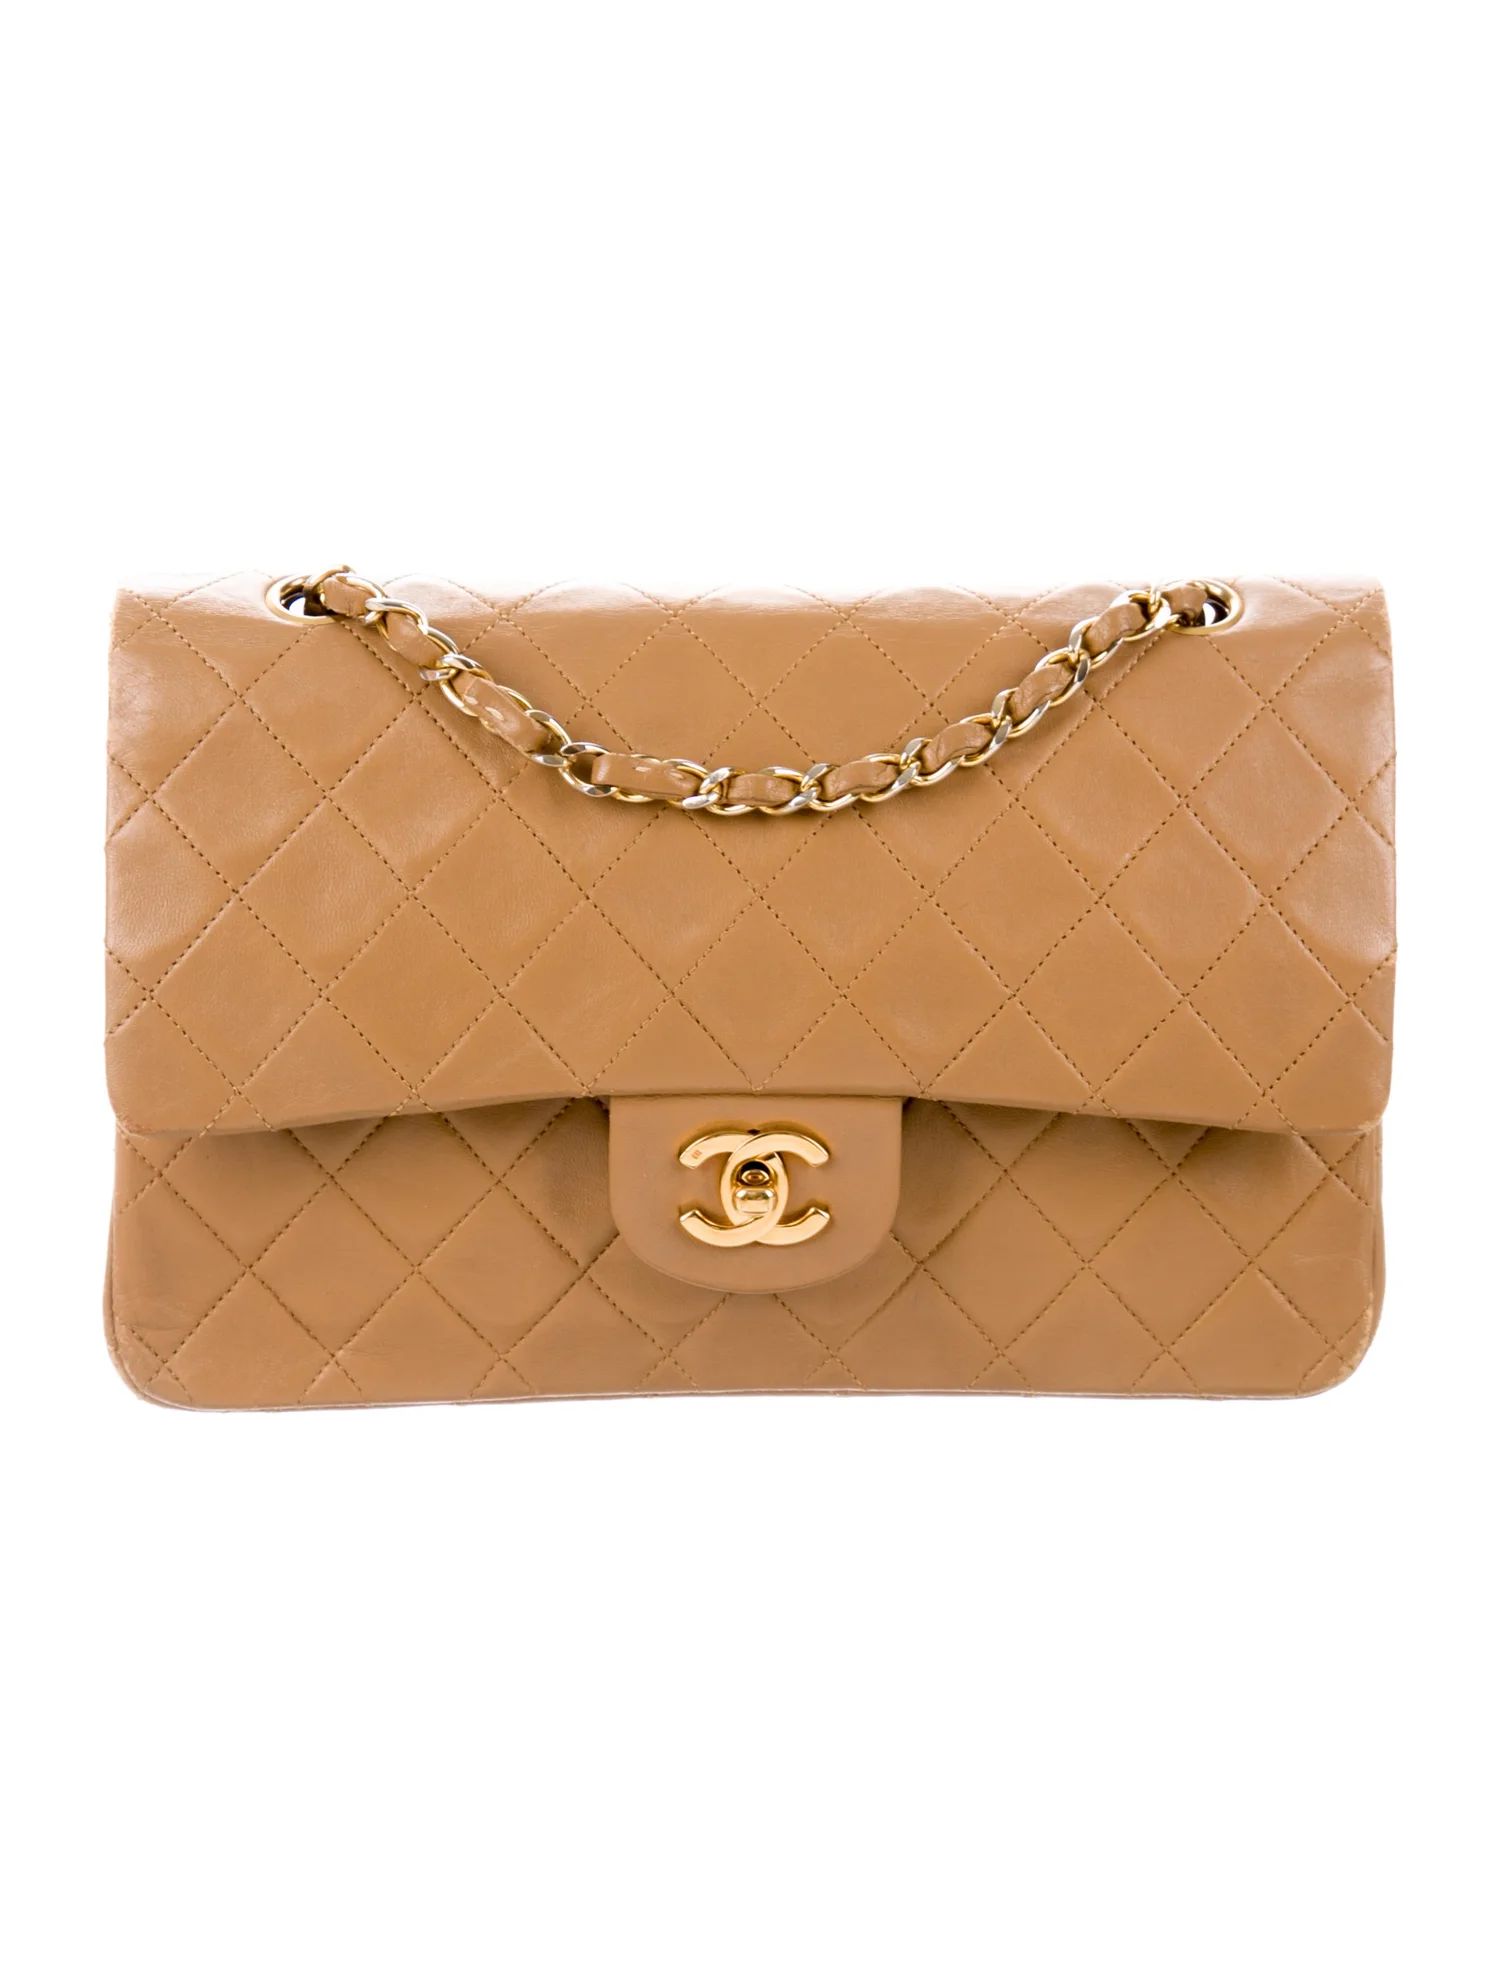 Chanel Vintage Classic Medium Double Flap Bag - Handbags -
          CHA362527 | The RealReal | The RealReal